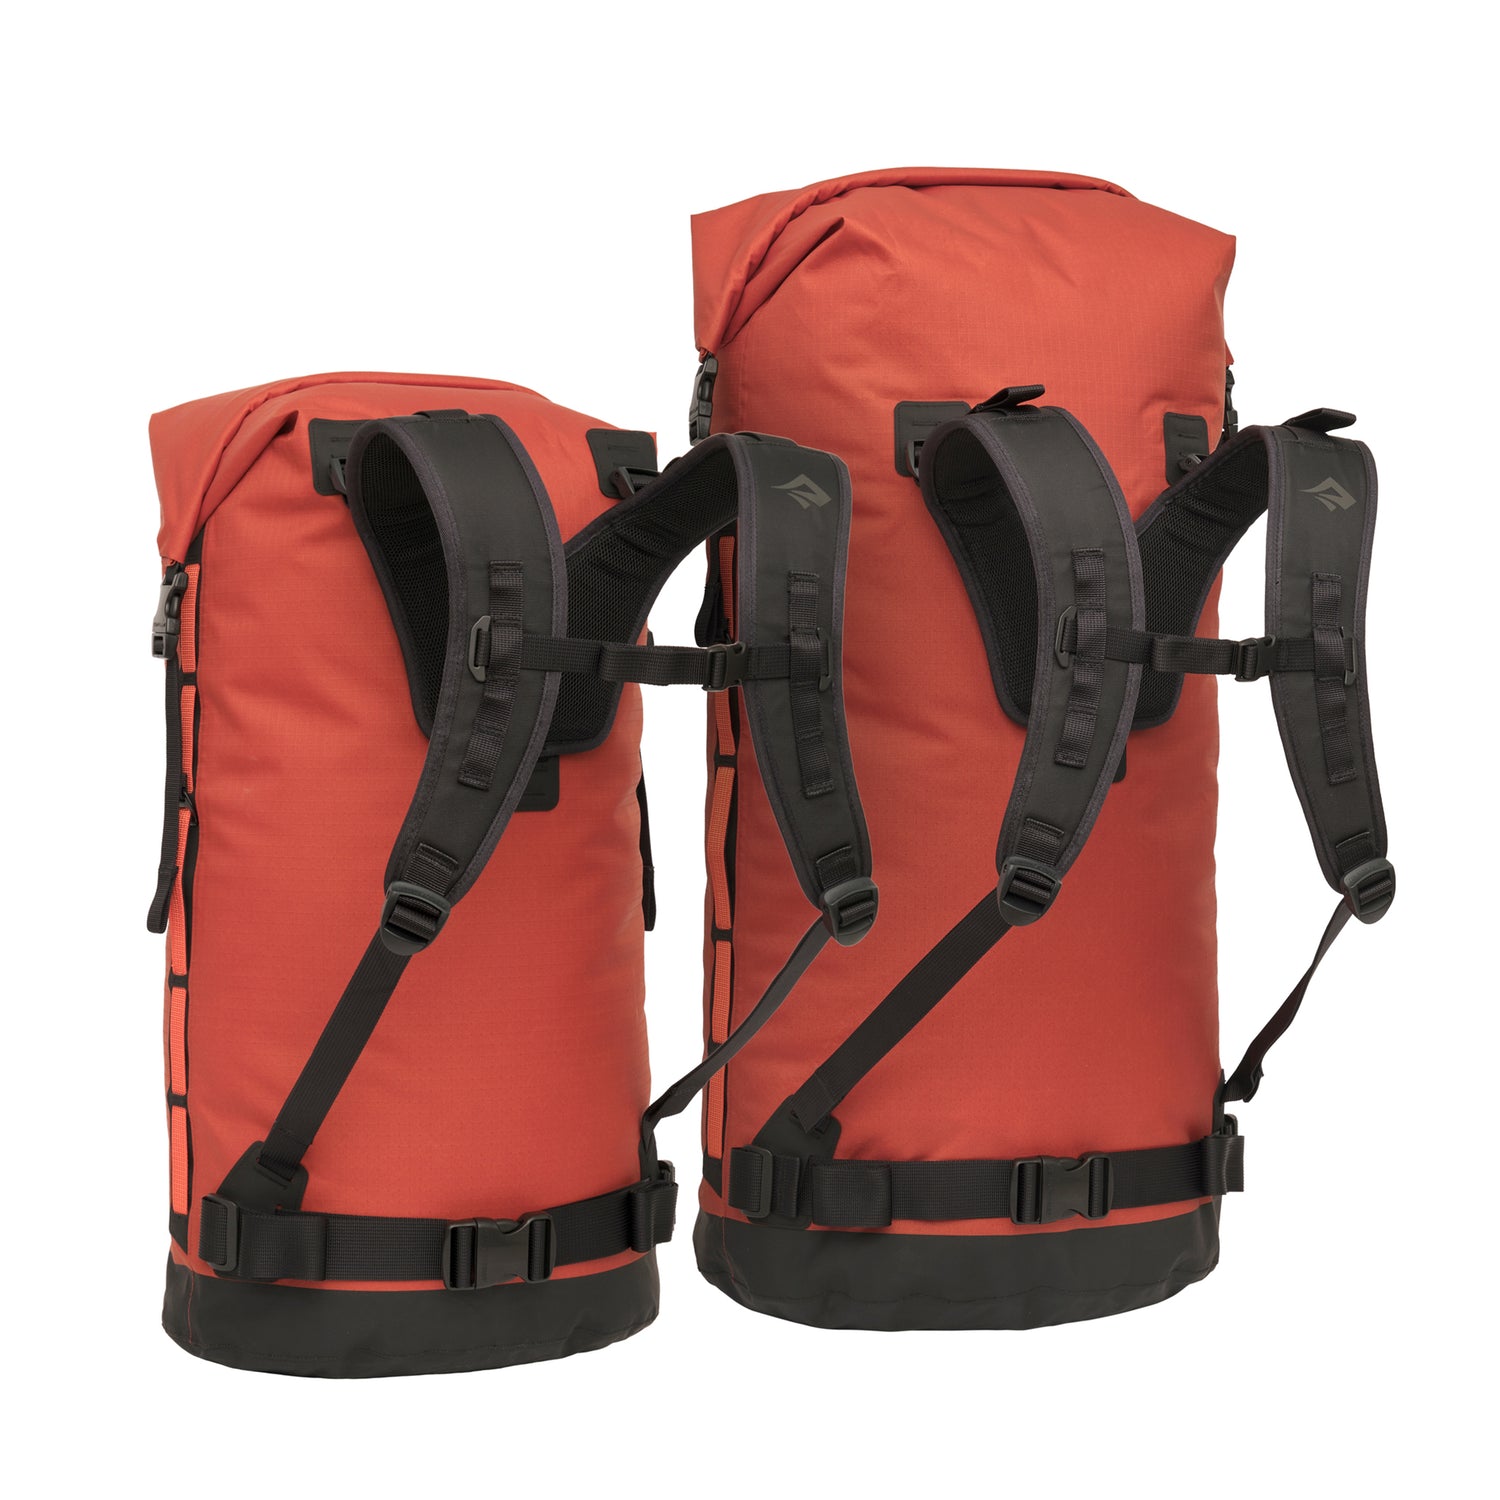 20 Liter Heavy Duty Waterproof Dry Bag